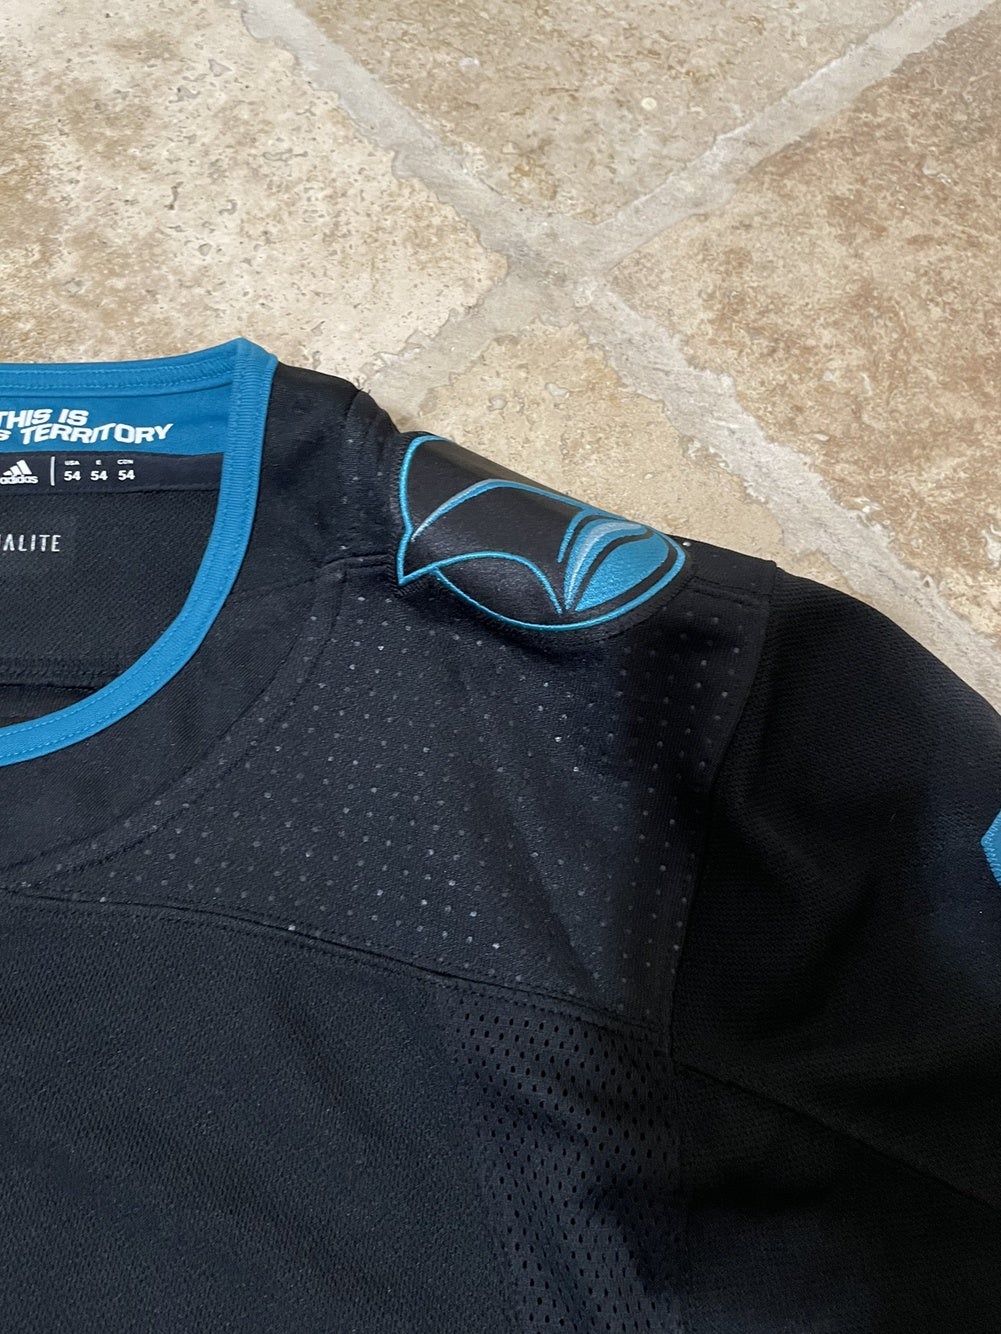 Evander Kane San Jose Sharks Black Adidas Authentic Jersey Size 54 Brand New